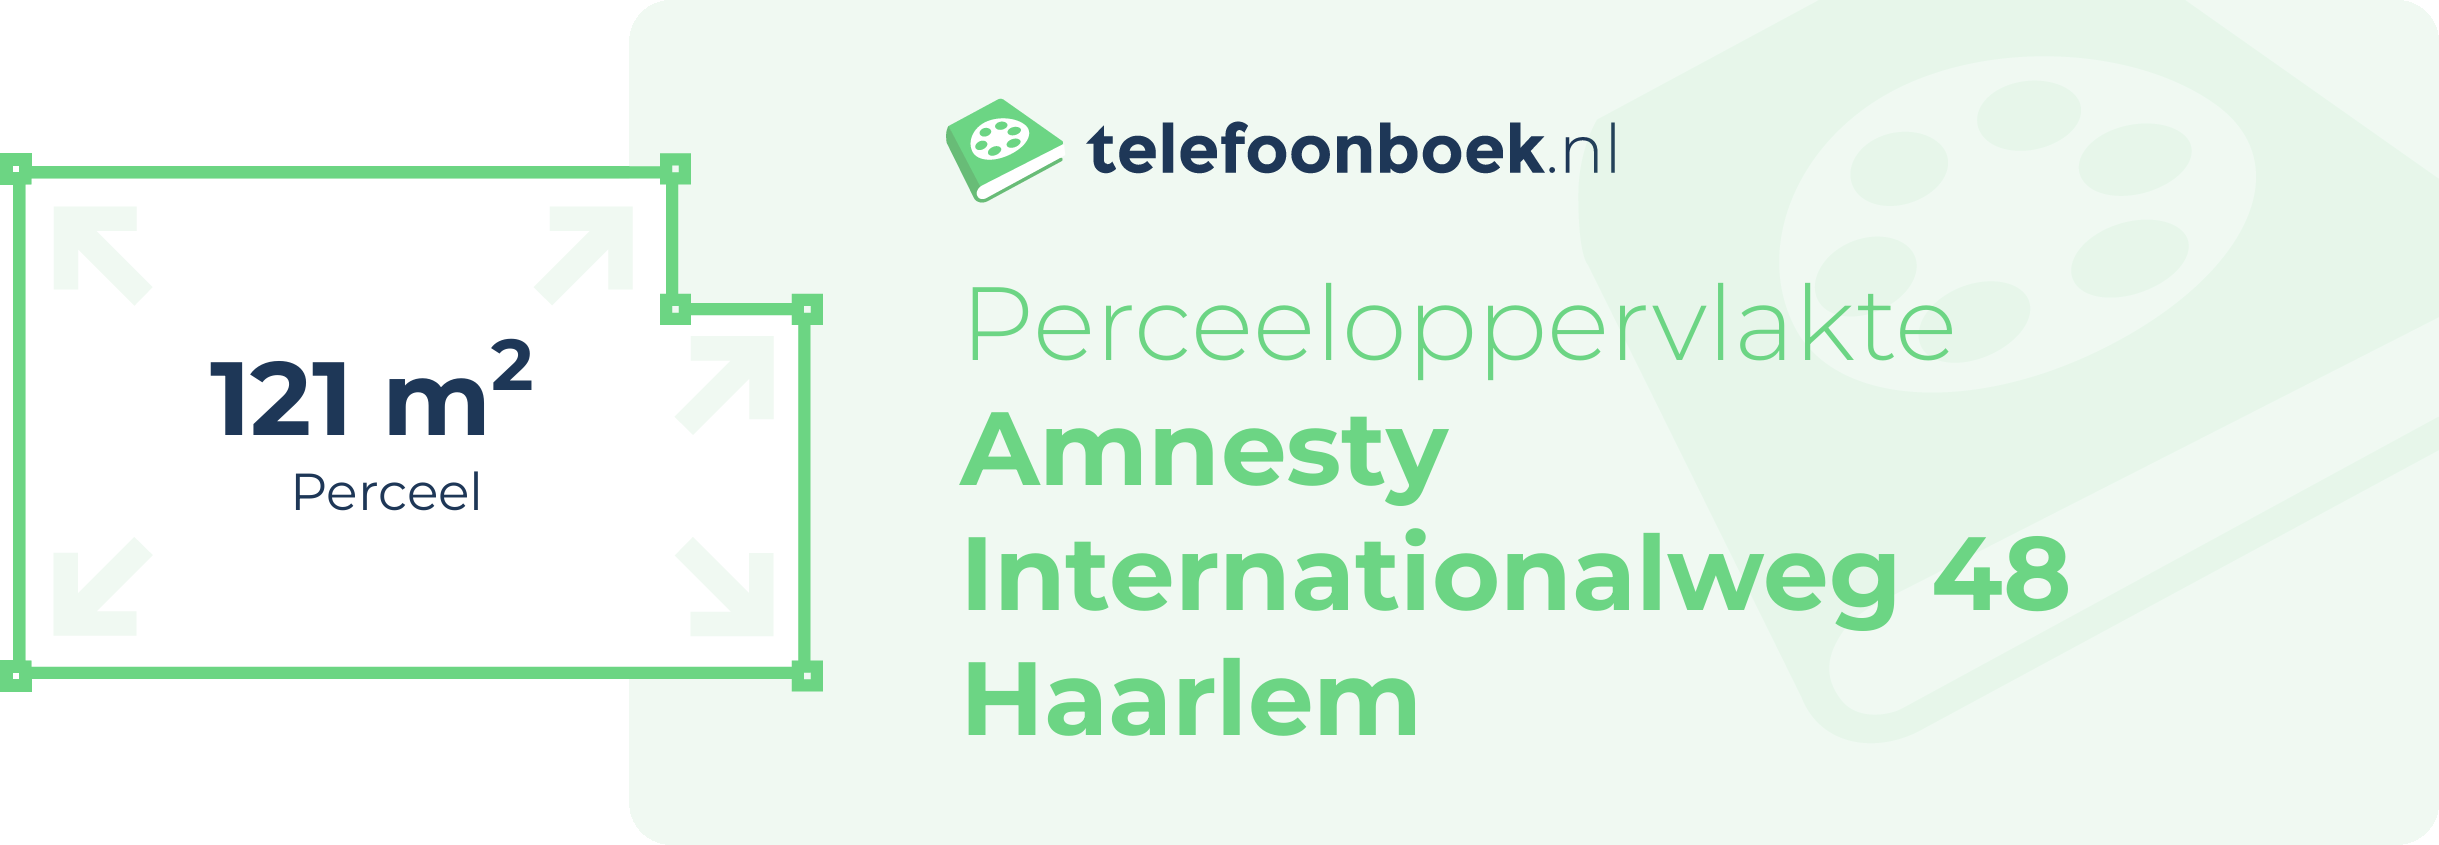 Perceeloppervlakte Amnesty Internationalweg 48 Haarlem